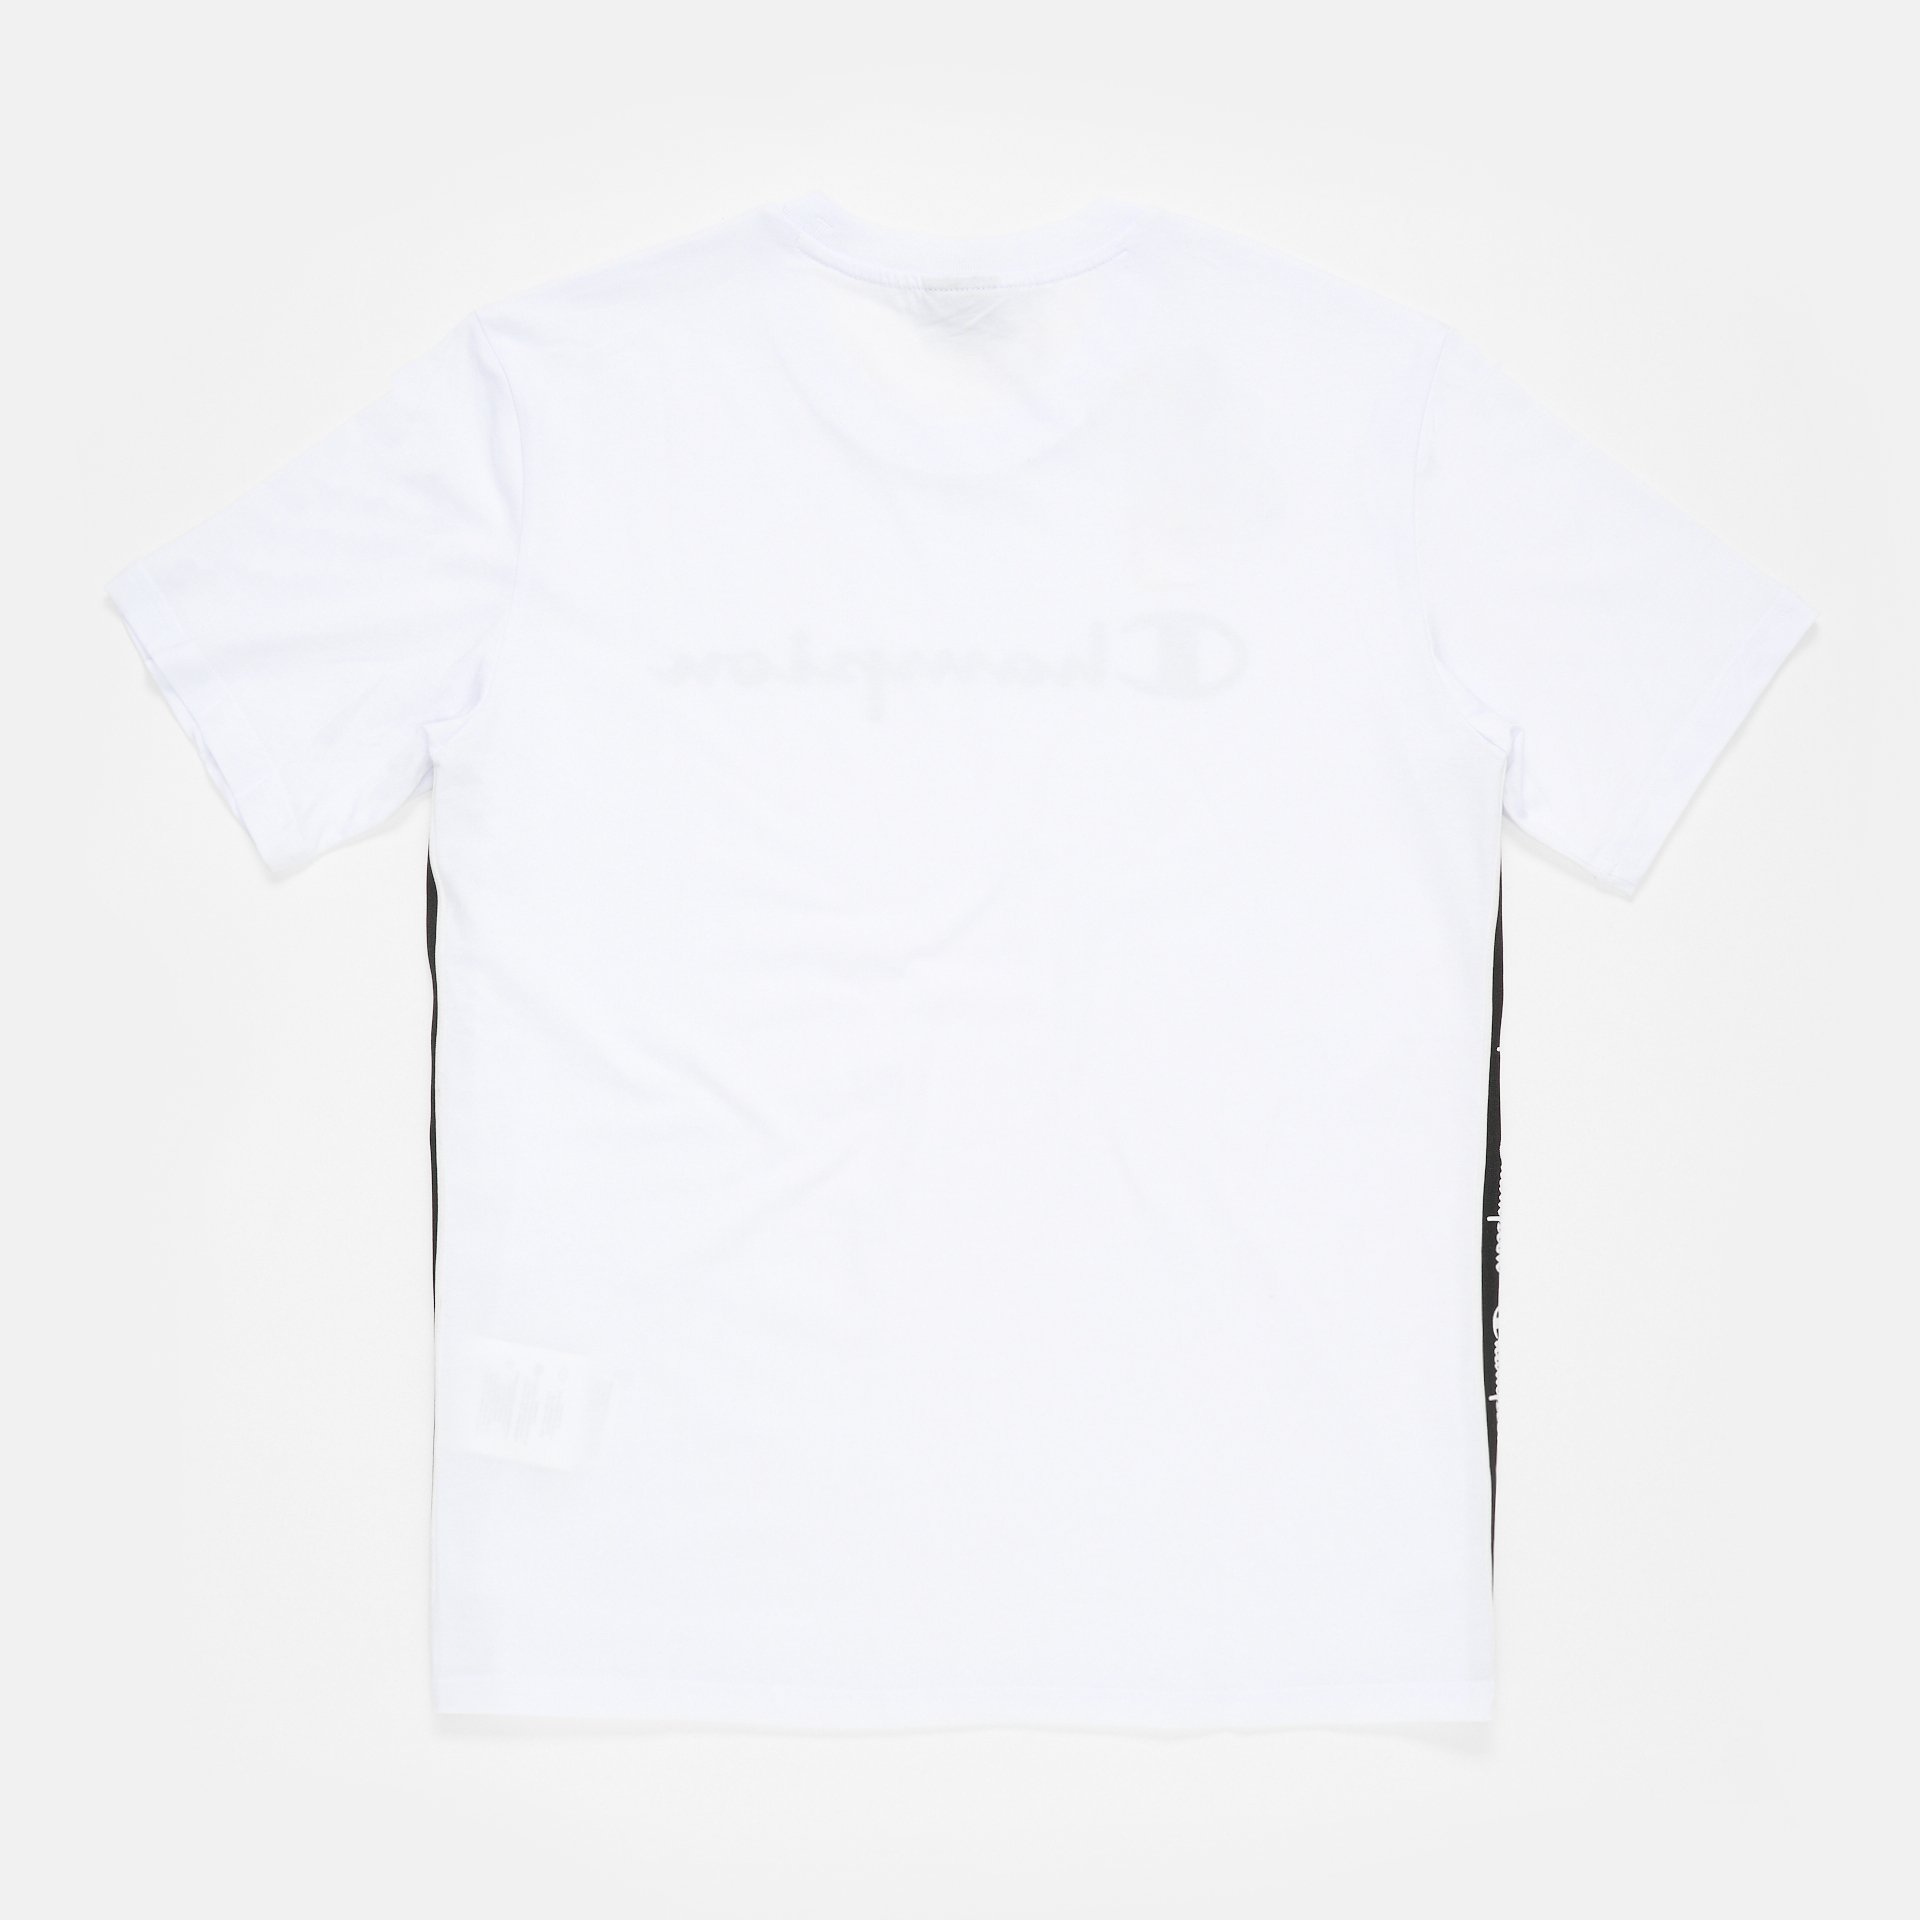 Champion T-Shirt  Crewneck White